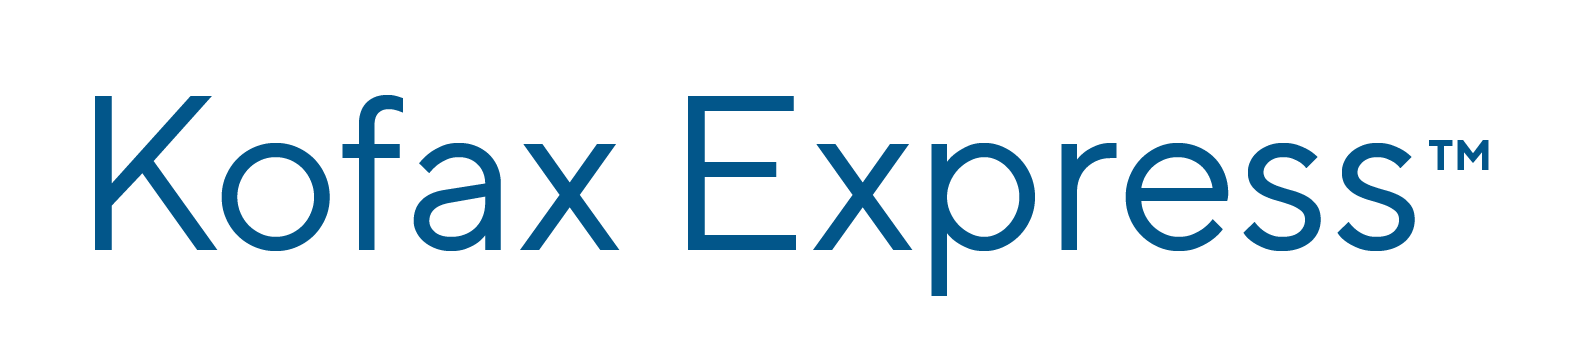 Kofax Express Blue logo